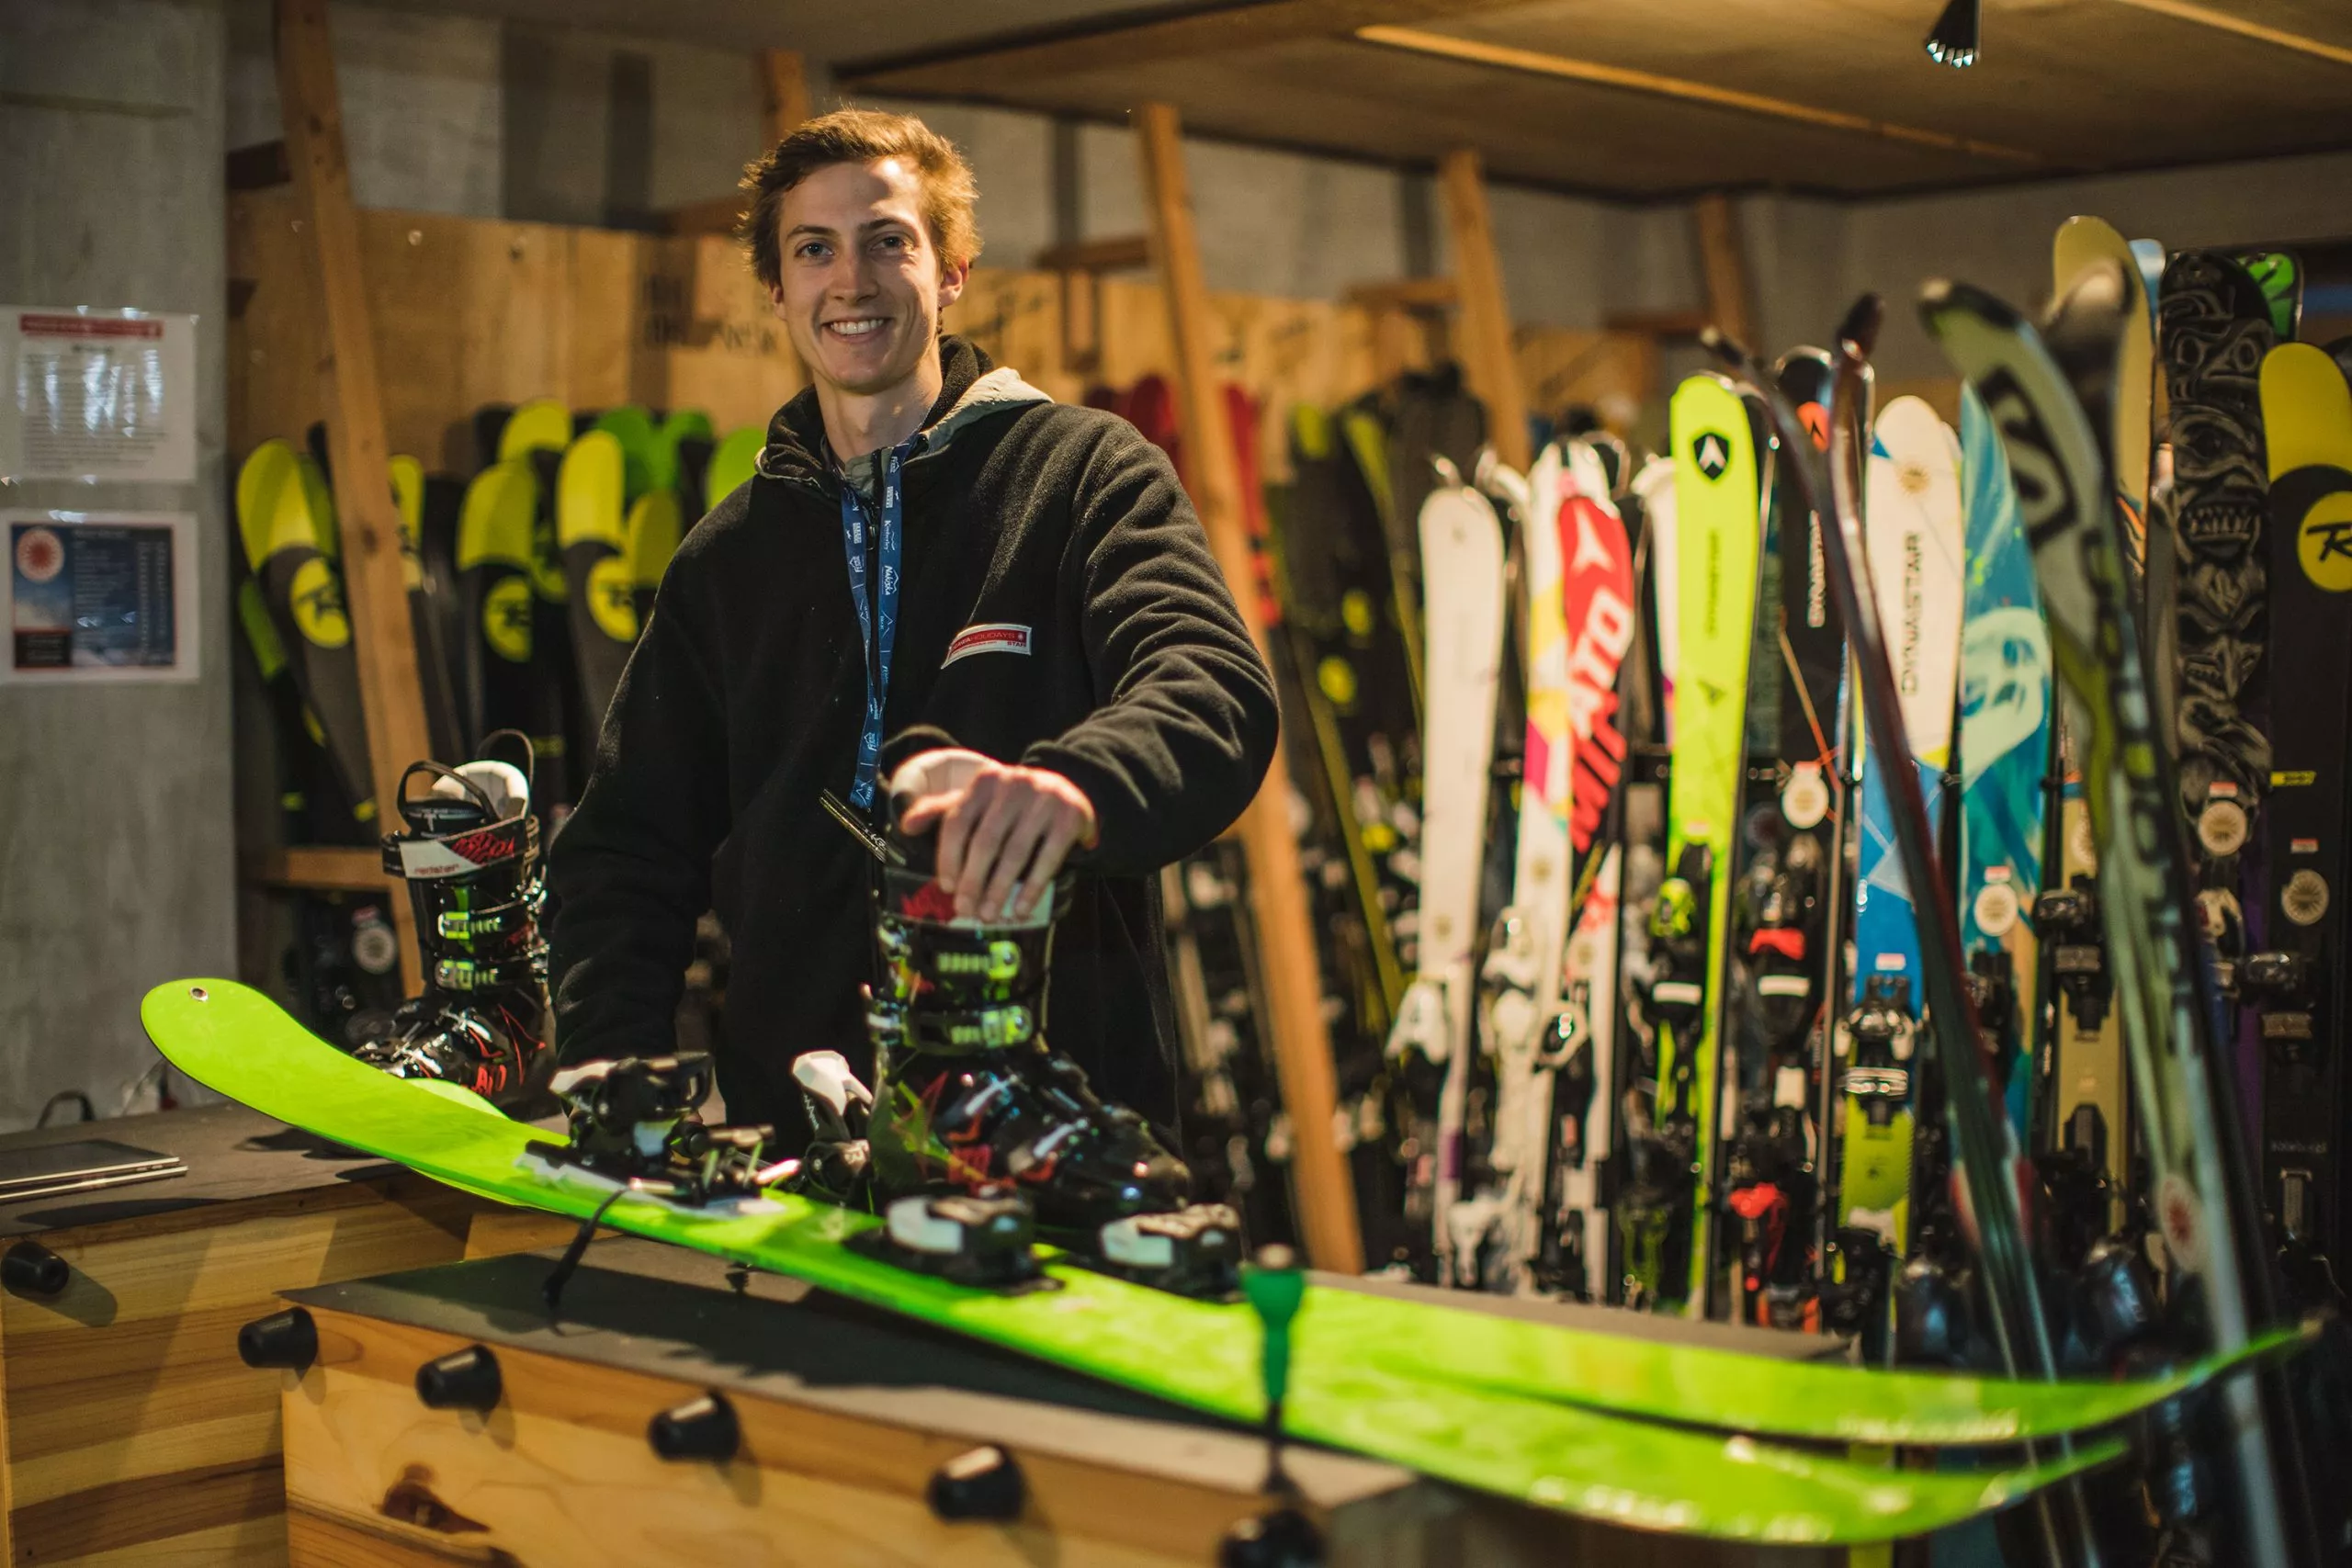 Nozawa Ski Rental in Japan, East Asia | Snowboarding,Skiing - Rated 0.8